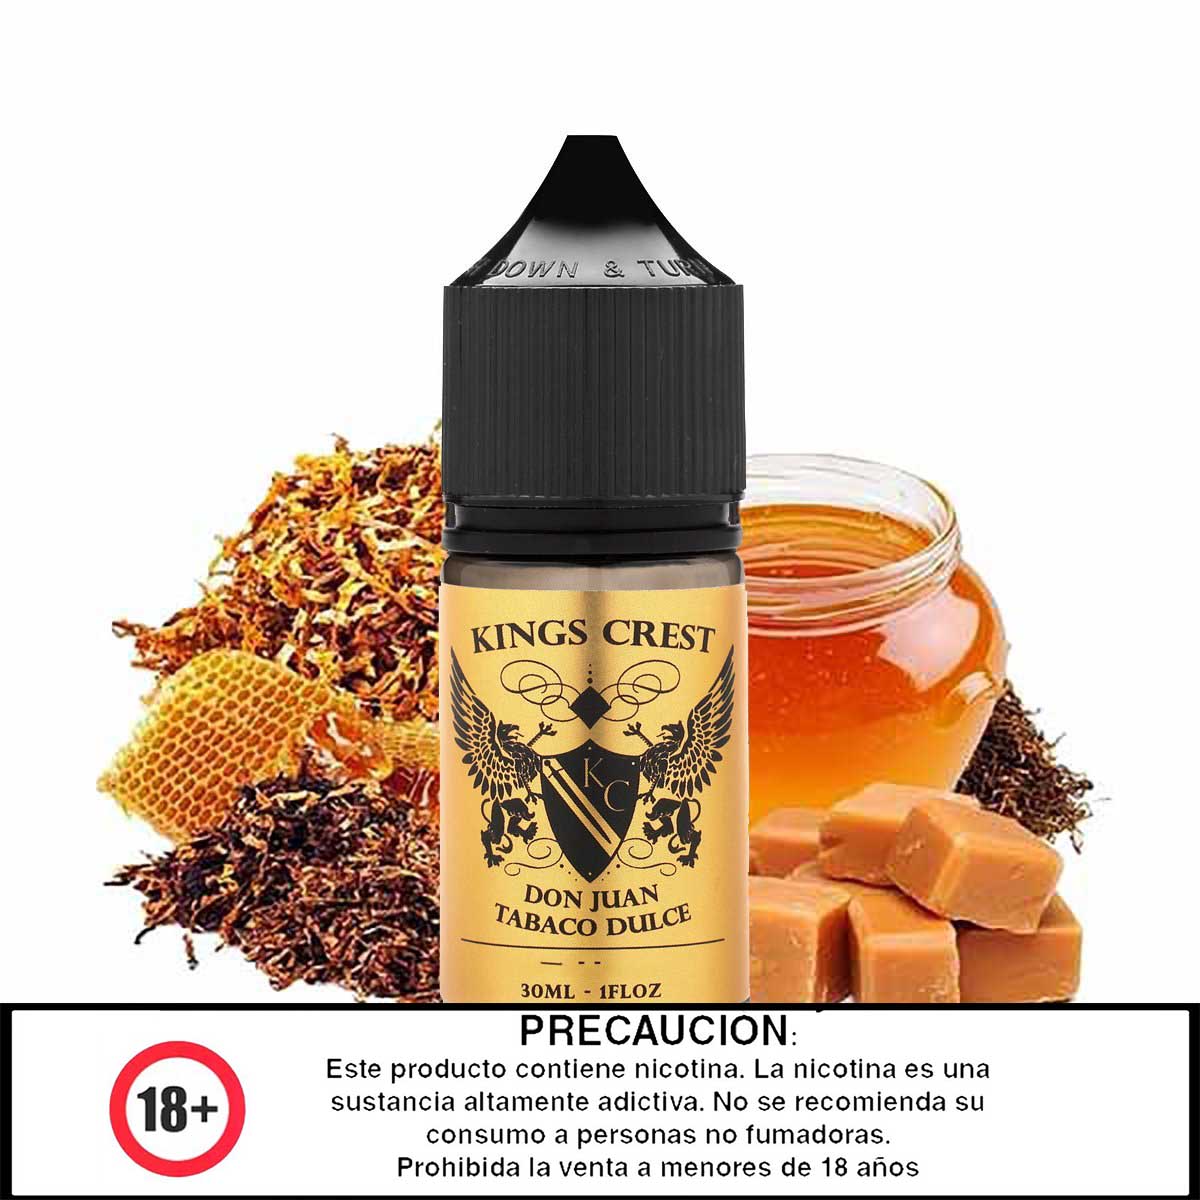 Don Juan Reserve tabaco dulce salts 30 ml - Kings Crest